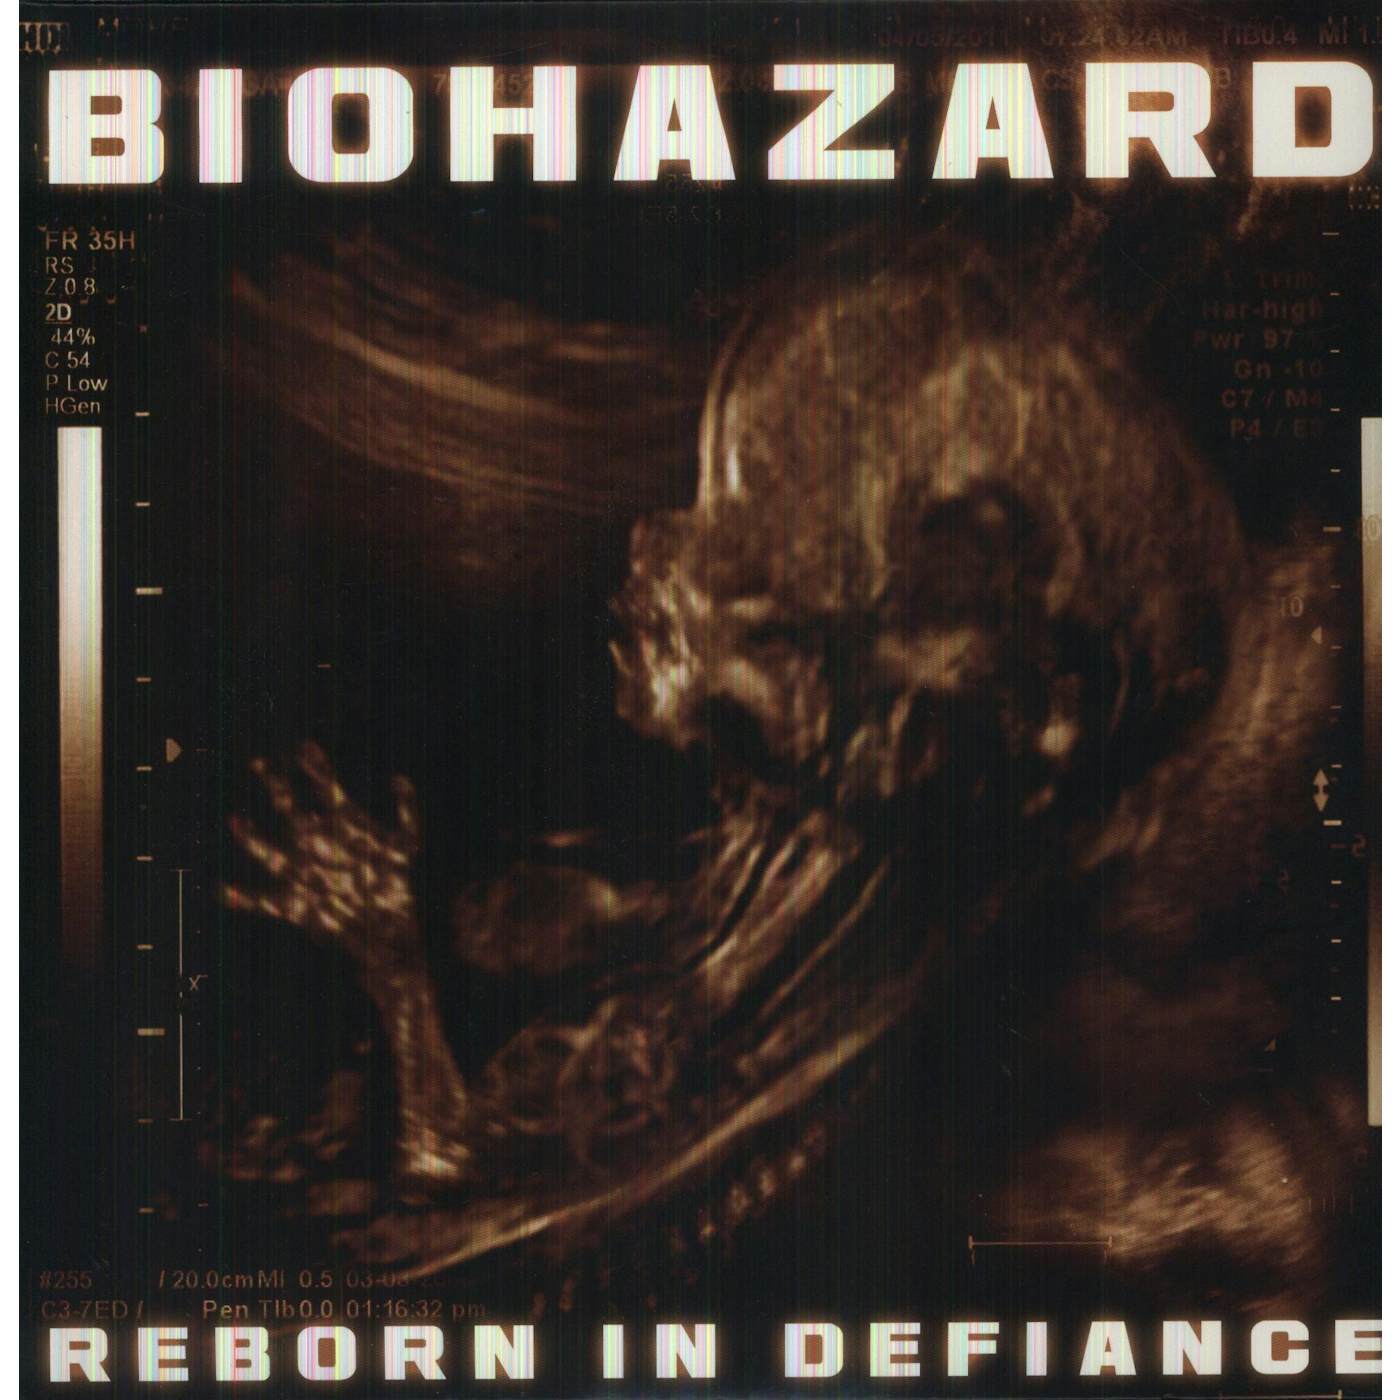 Biohazard Reborn In Defiance Vinyl Record